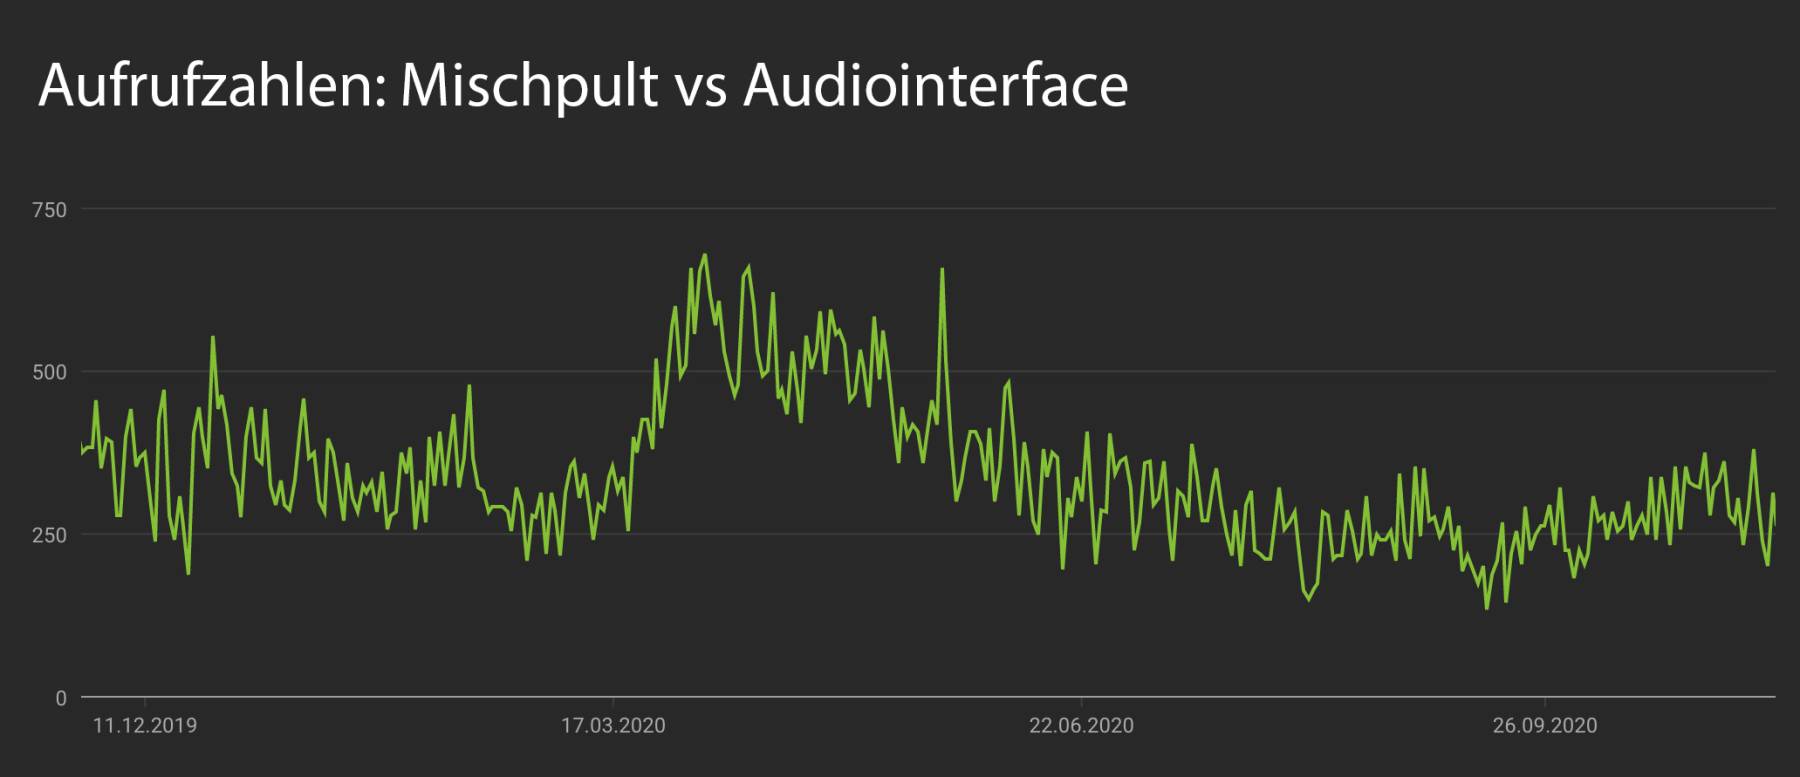 Aufrufzahlen: Mischpult vs Audiointerface